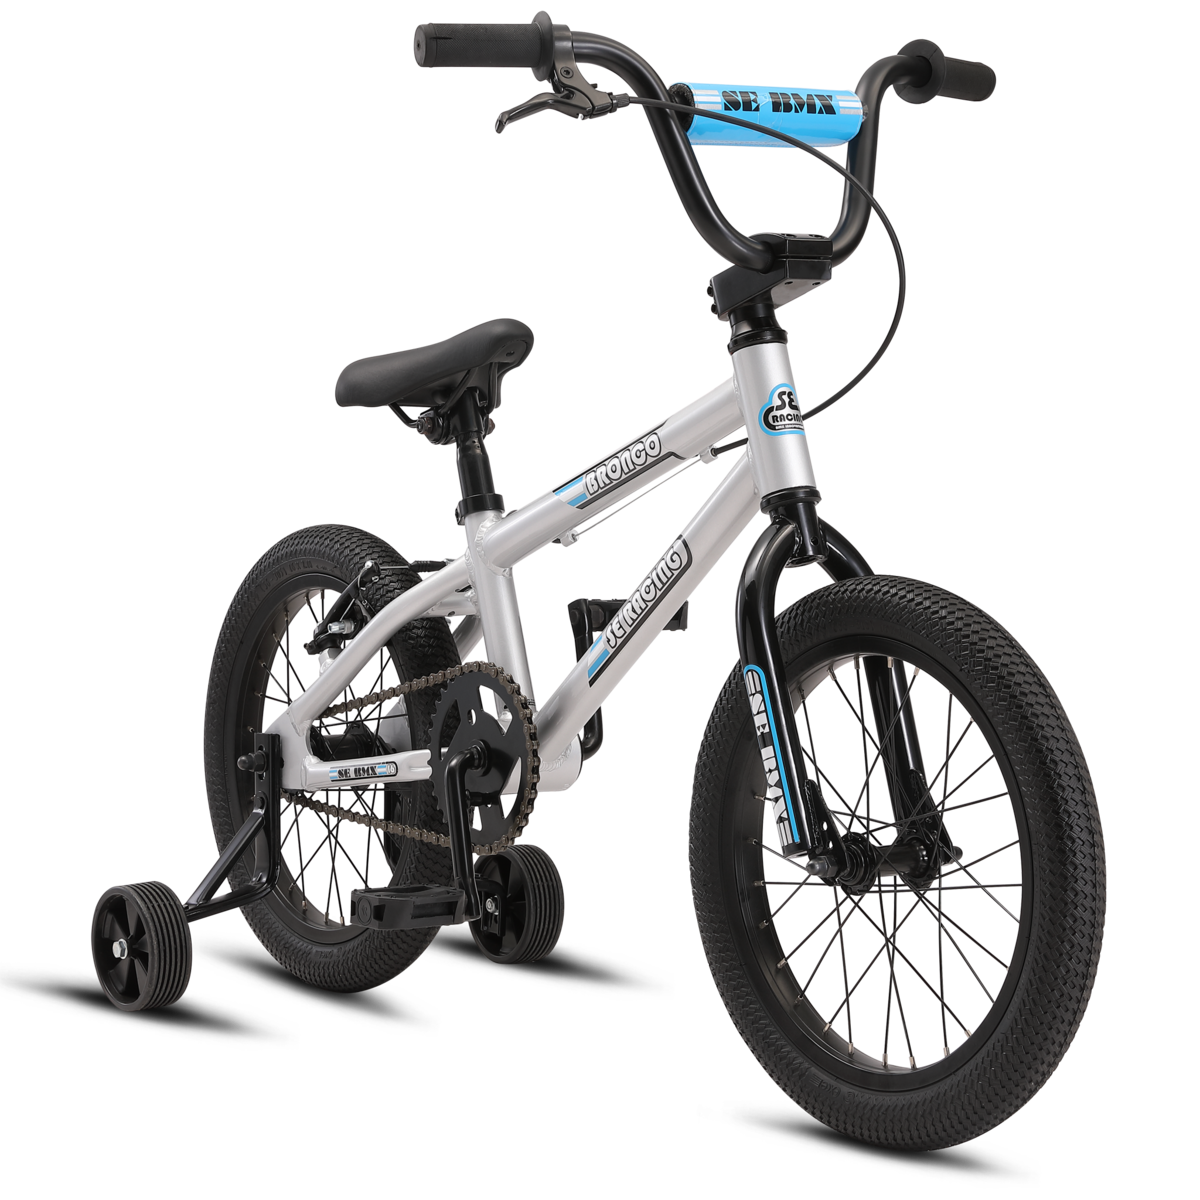 SE Bronco 16" Bmx Style Kid's Bike with Training Wheels